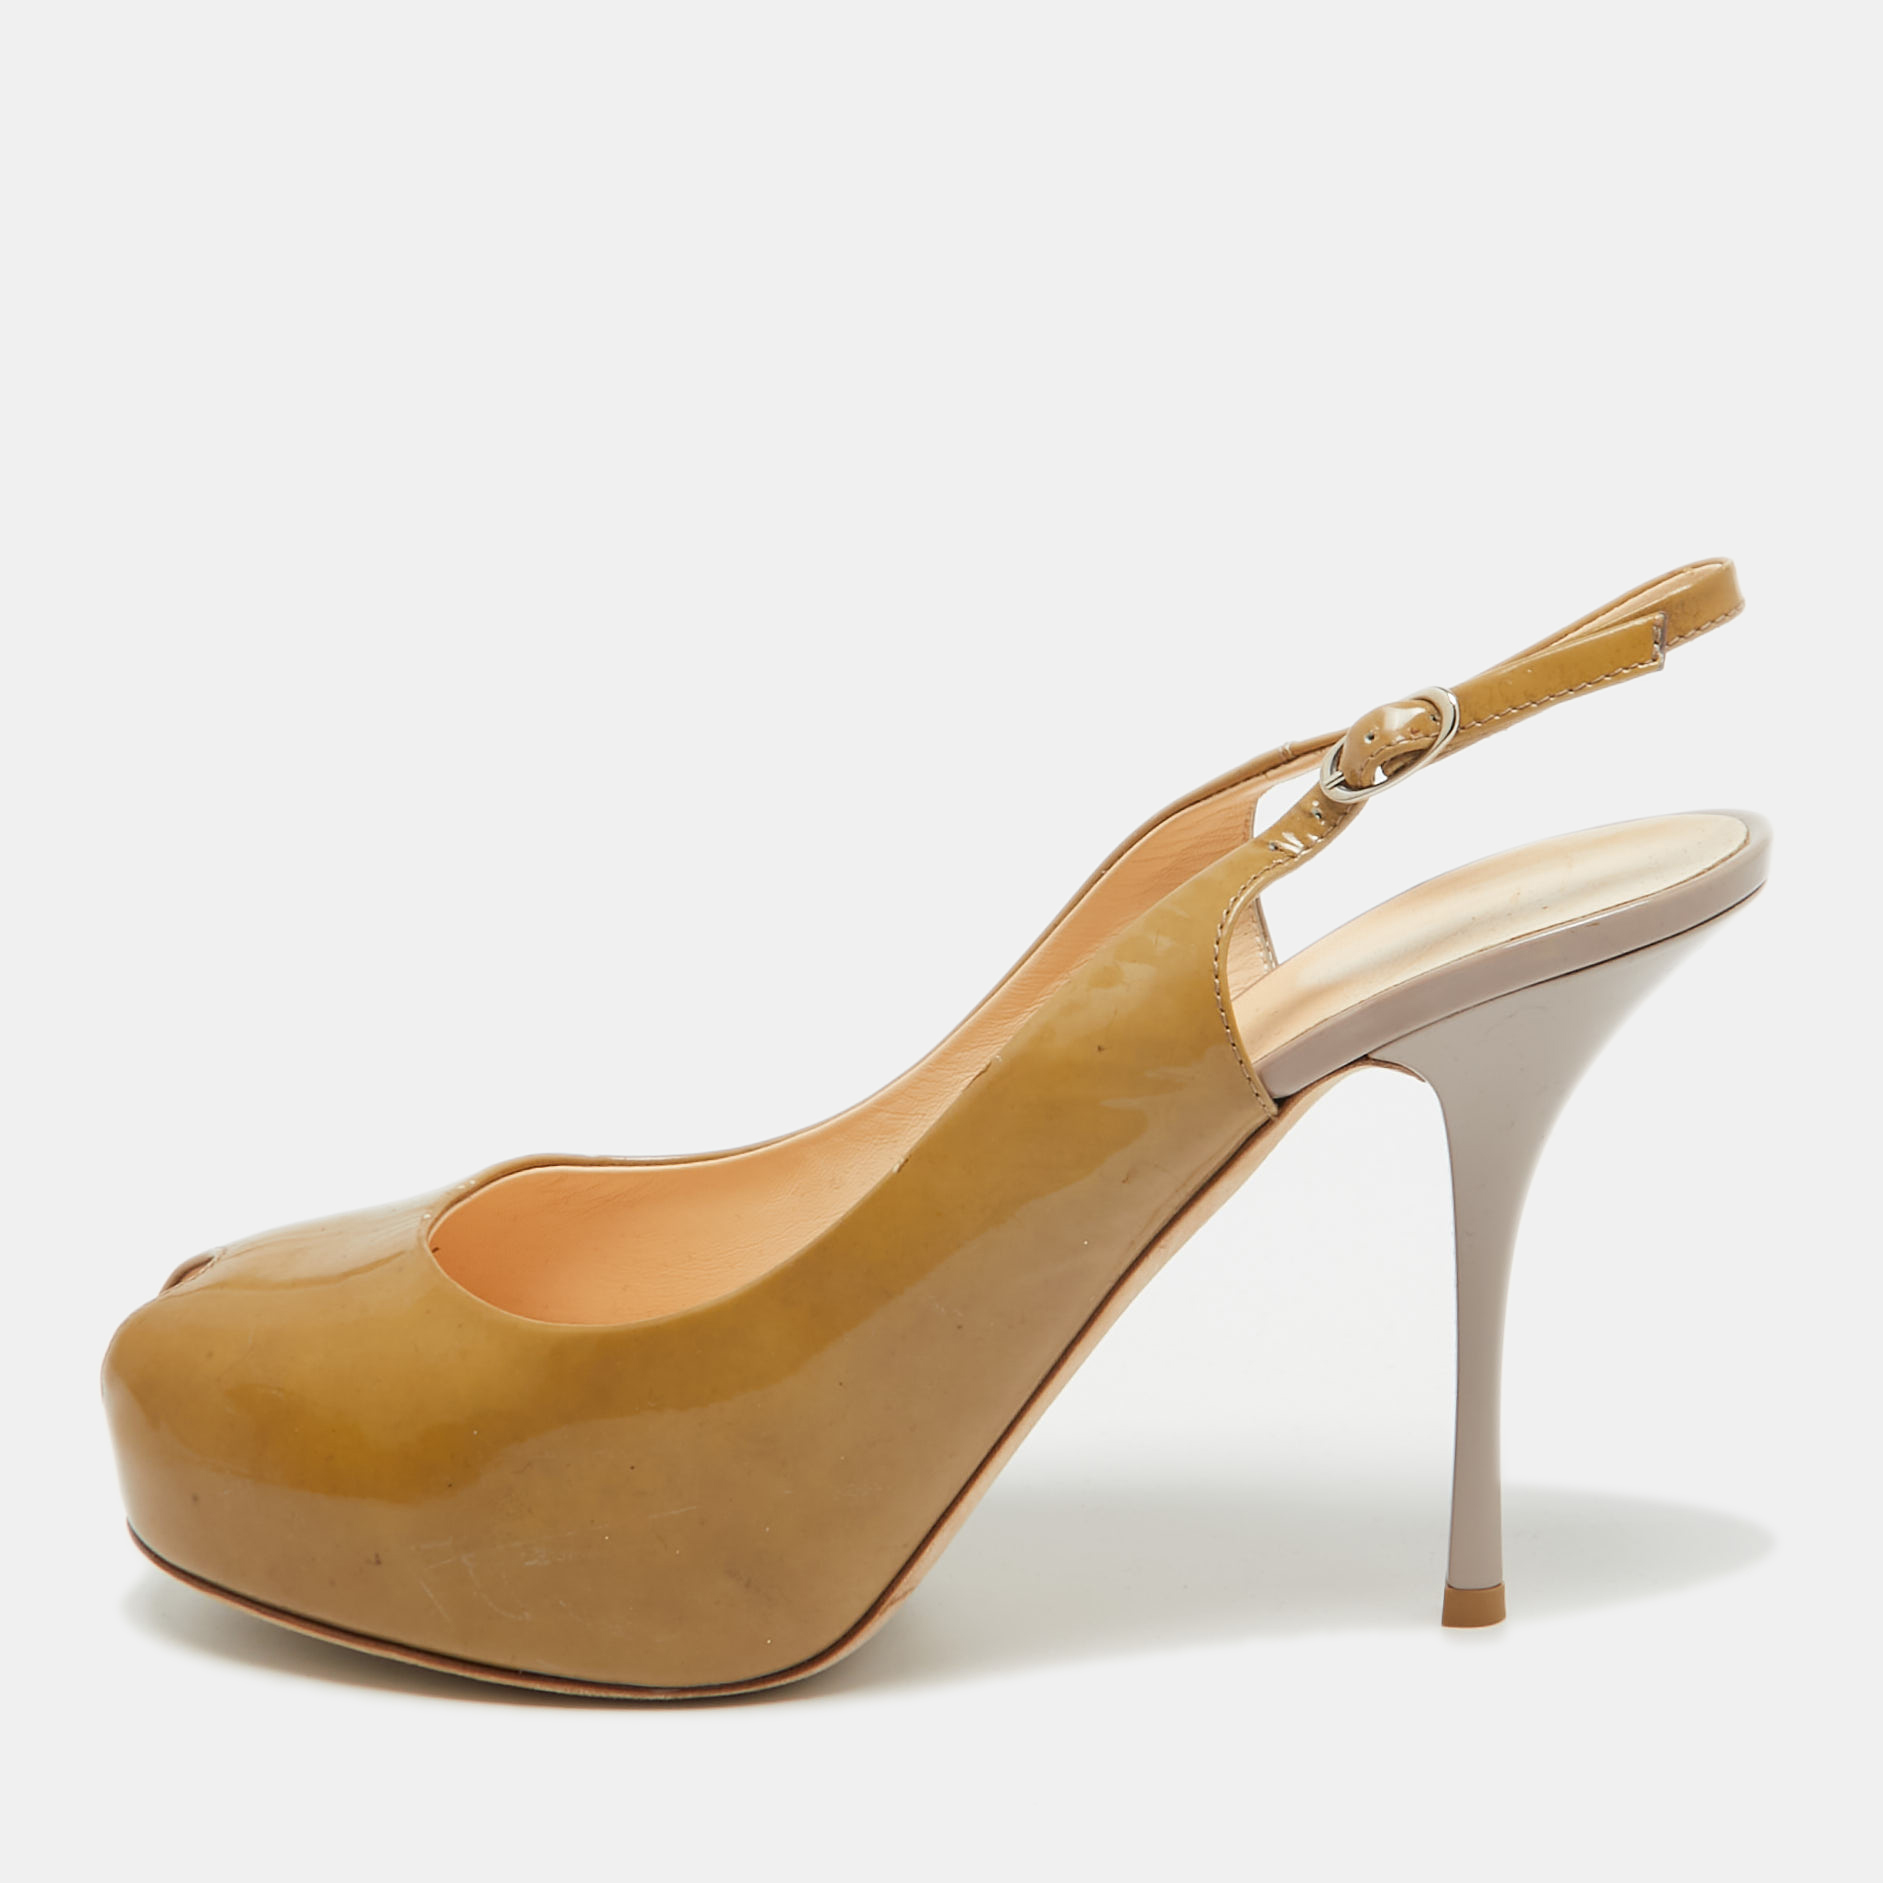 Giuseppe zanotti beige patent leather peep toe slingback pumps size 41